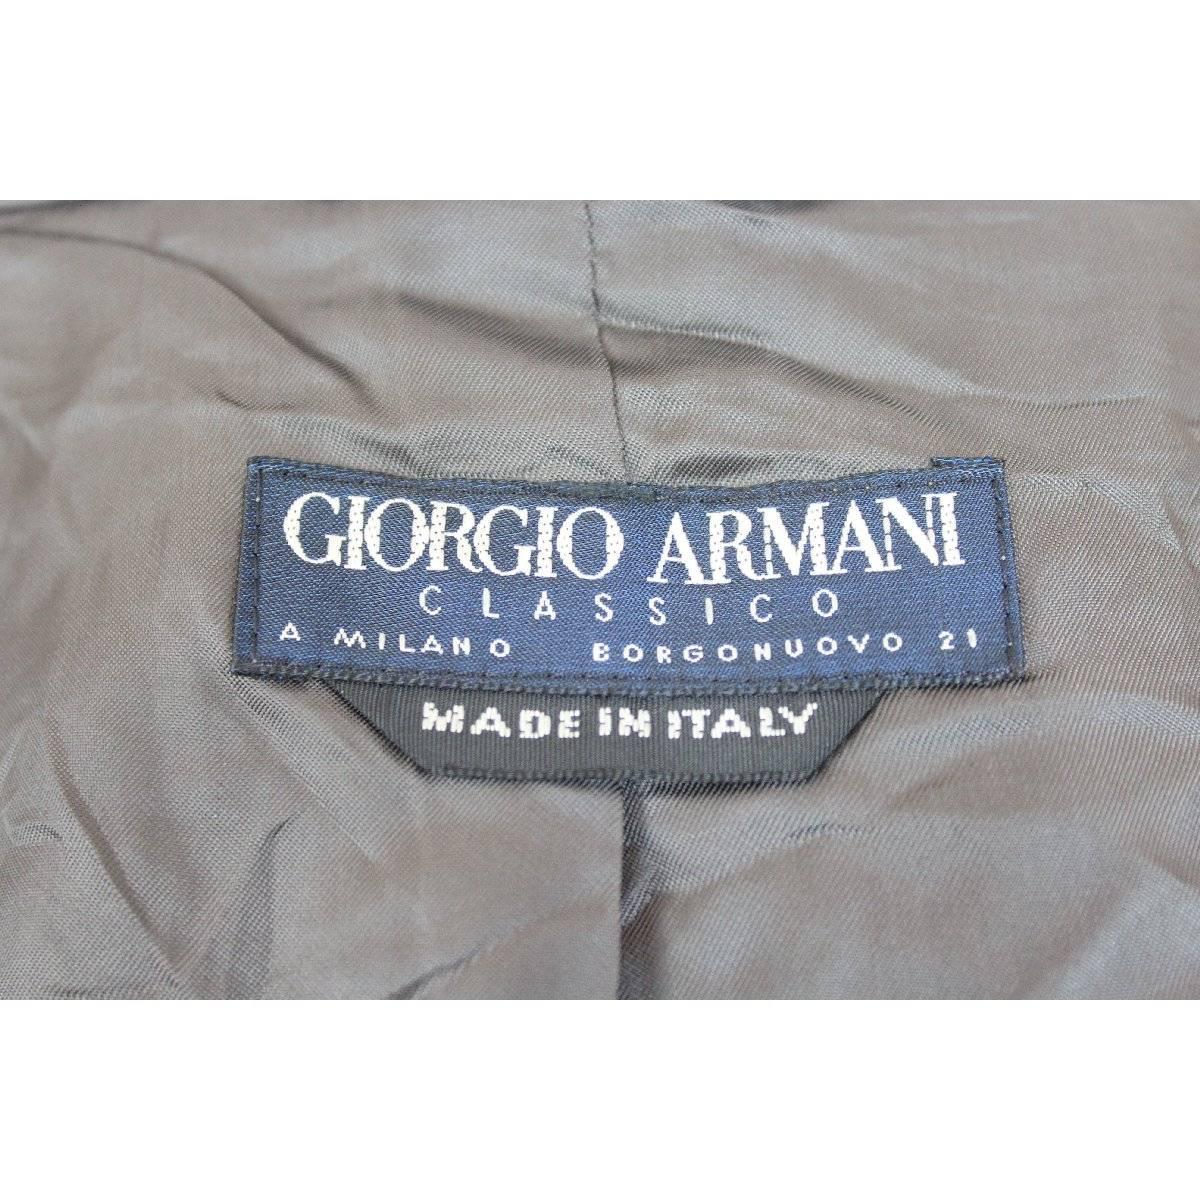 Giorgio Armani vintage trench coat gray pearl classico 56 1980s overcoat suit 1